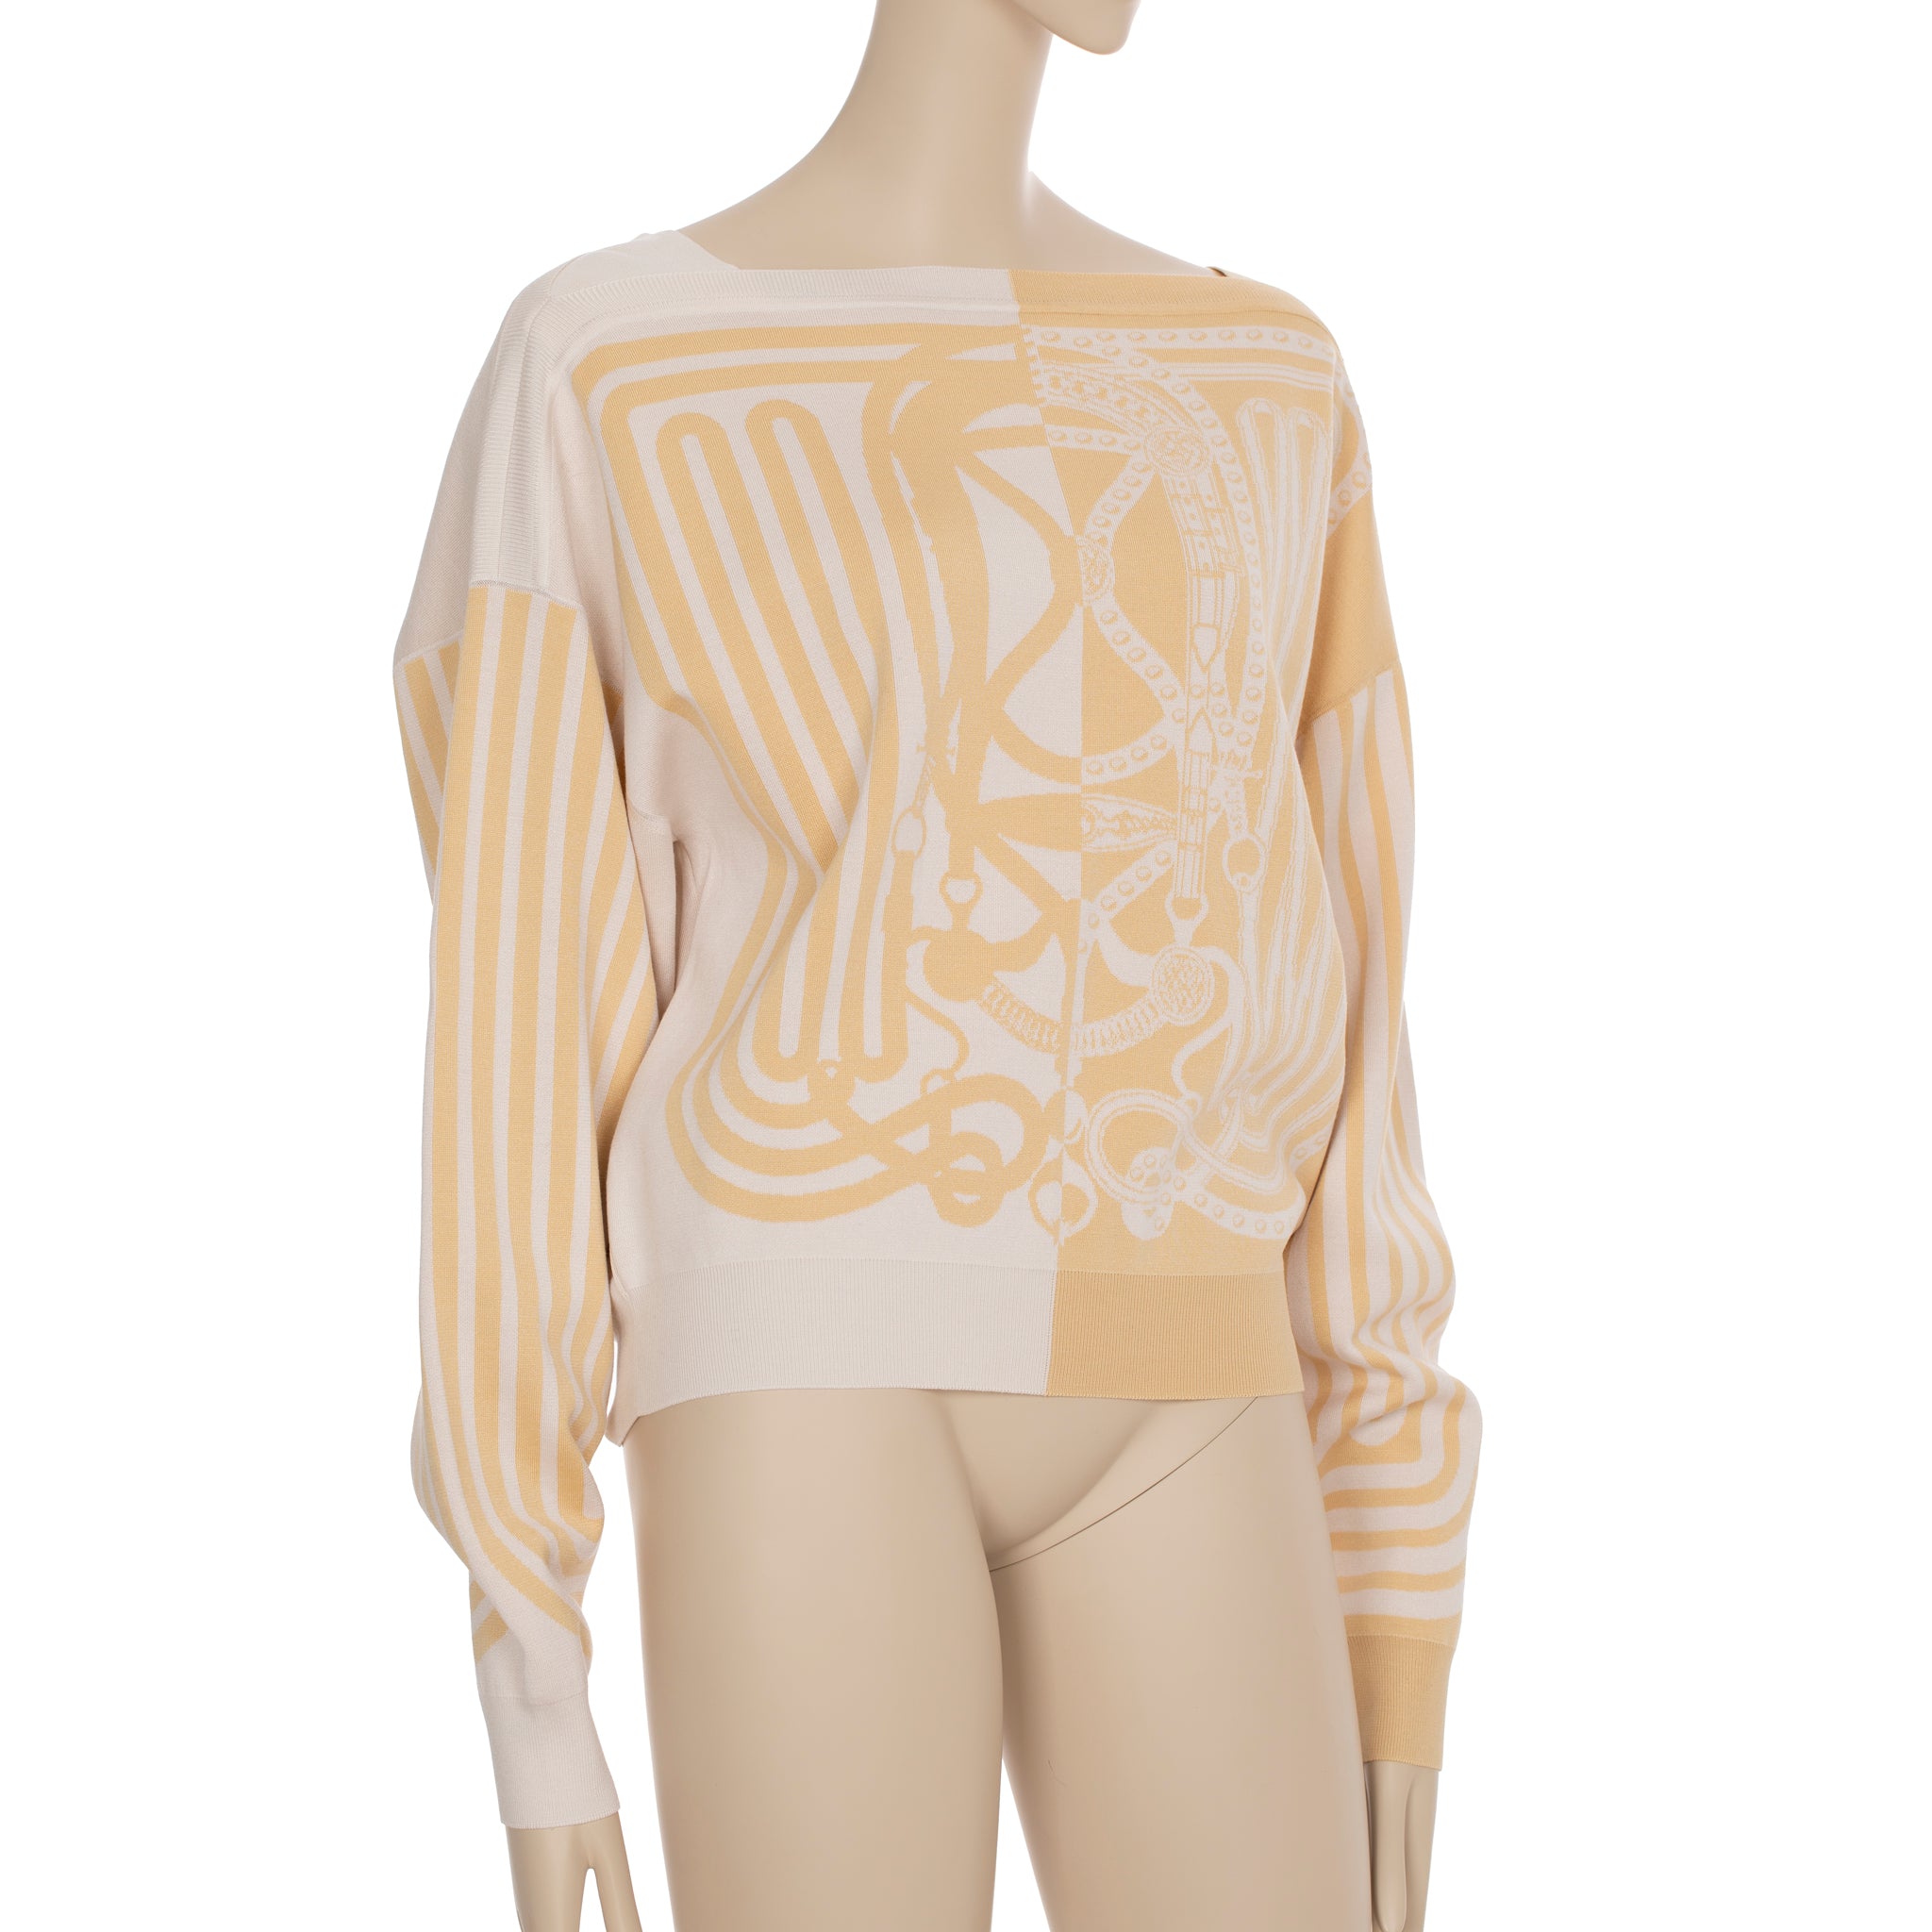 Hermes Knit Sweater "Grand Tralala" Ivory & Beige Print 40 FR